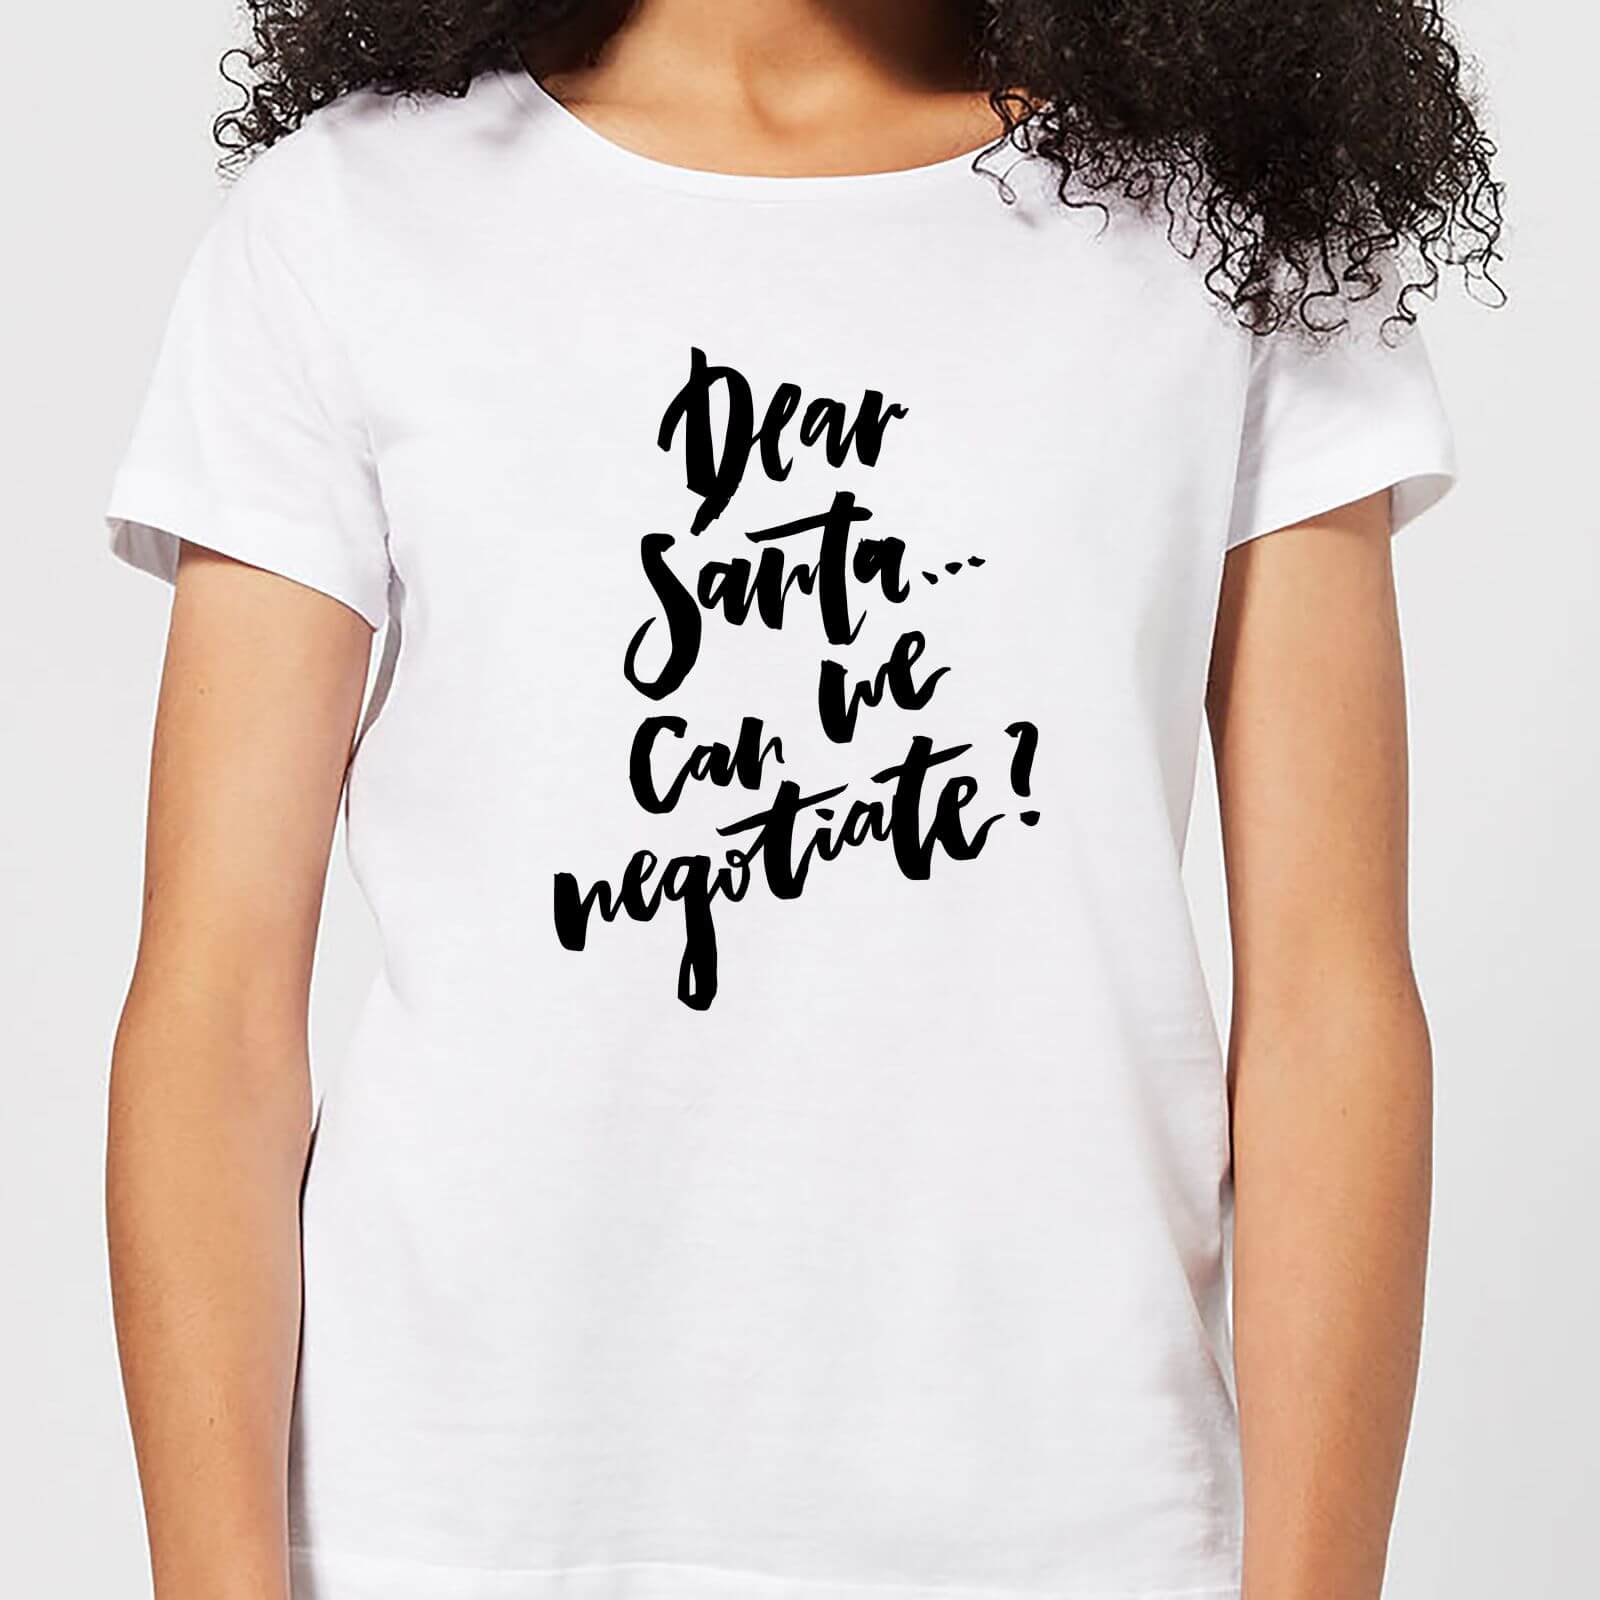 Dear Santa, Can We Negotiate? Women's T-Shirt - White - S - White